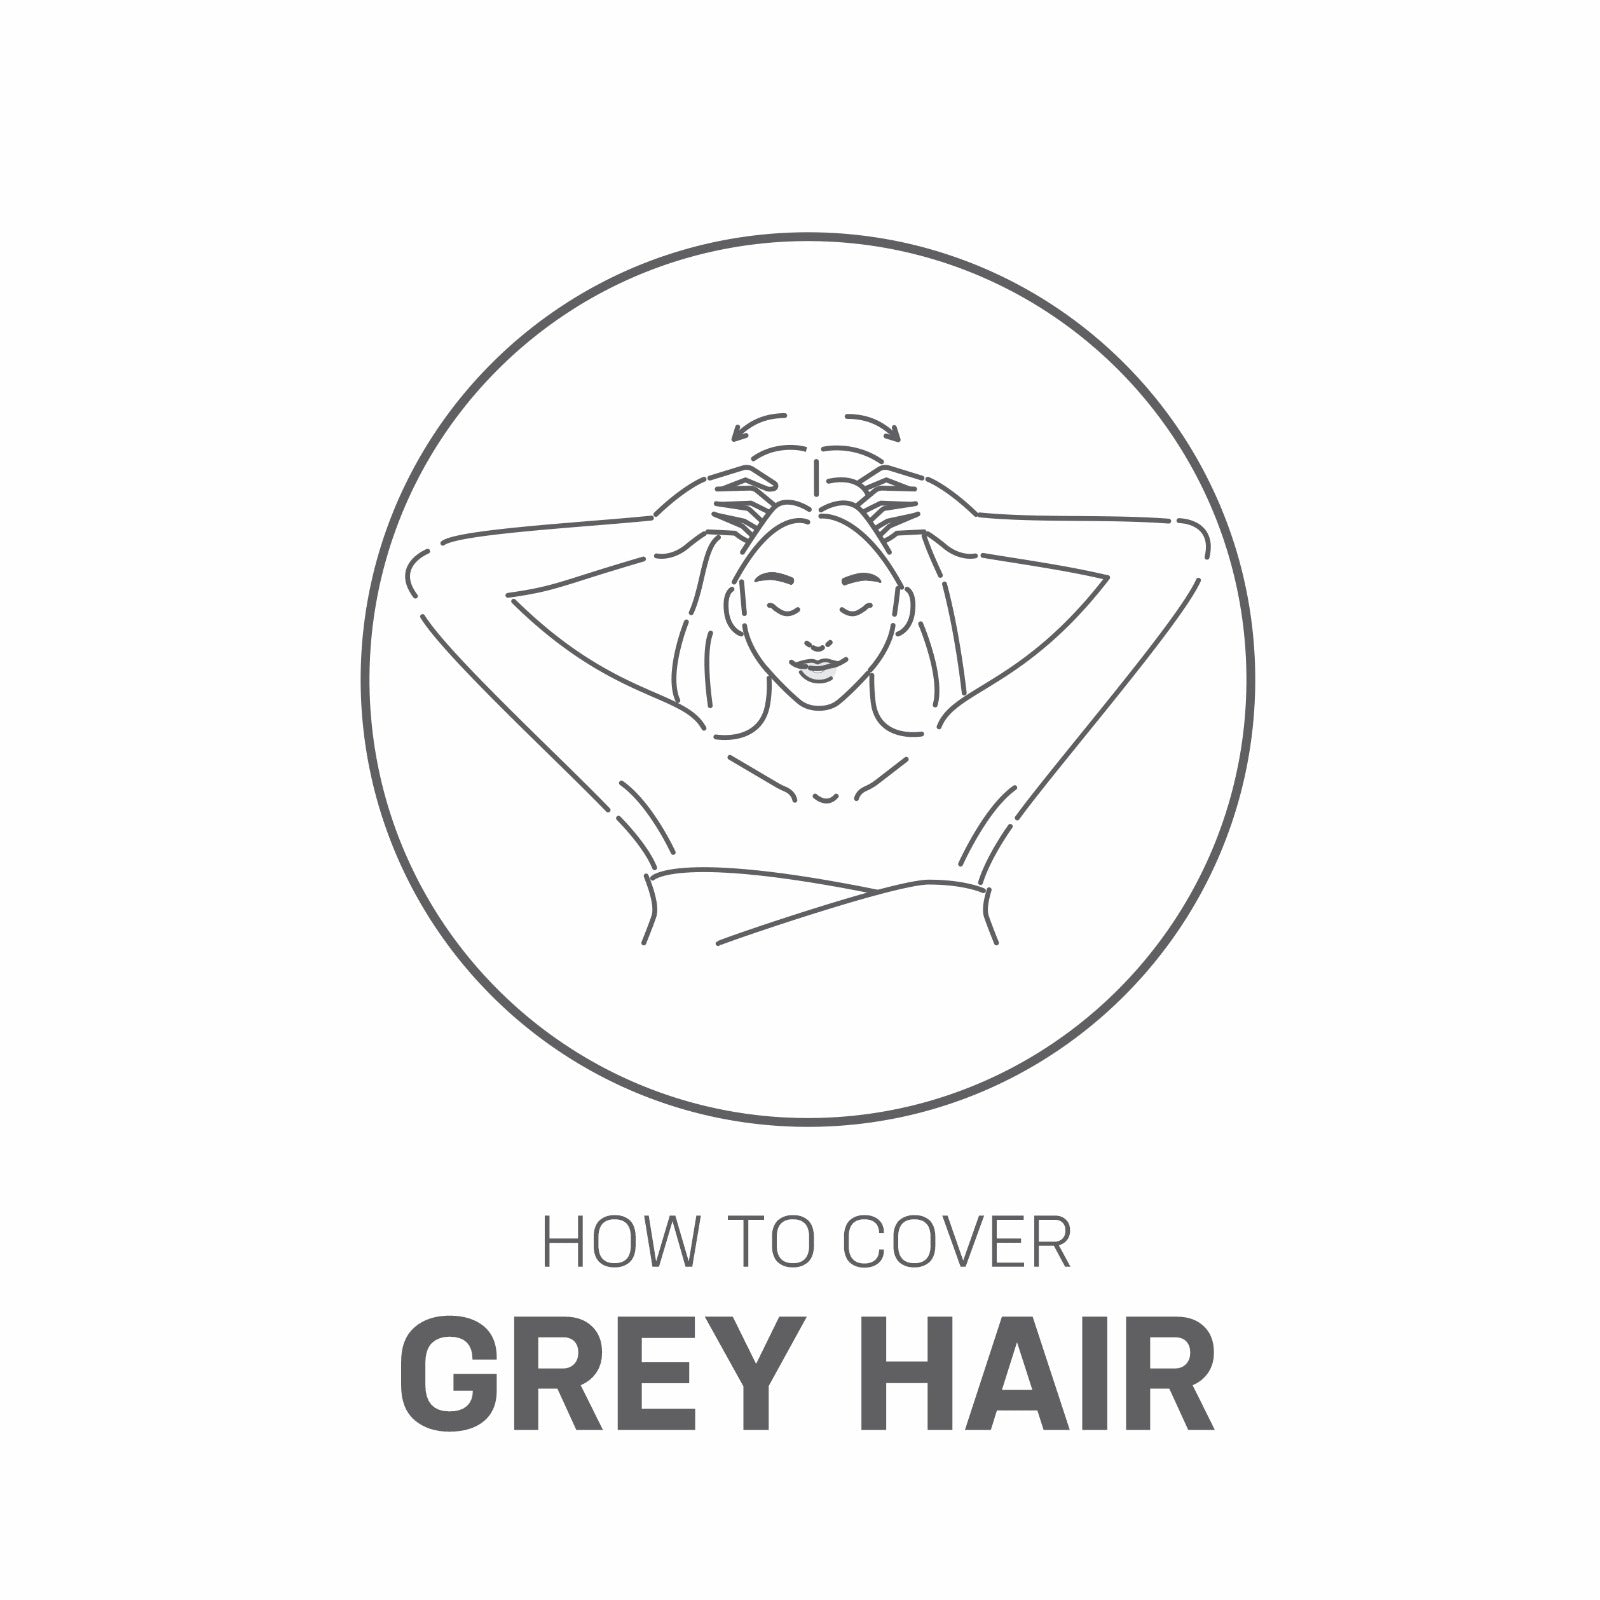 Grey hair covreage